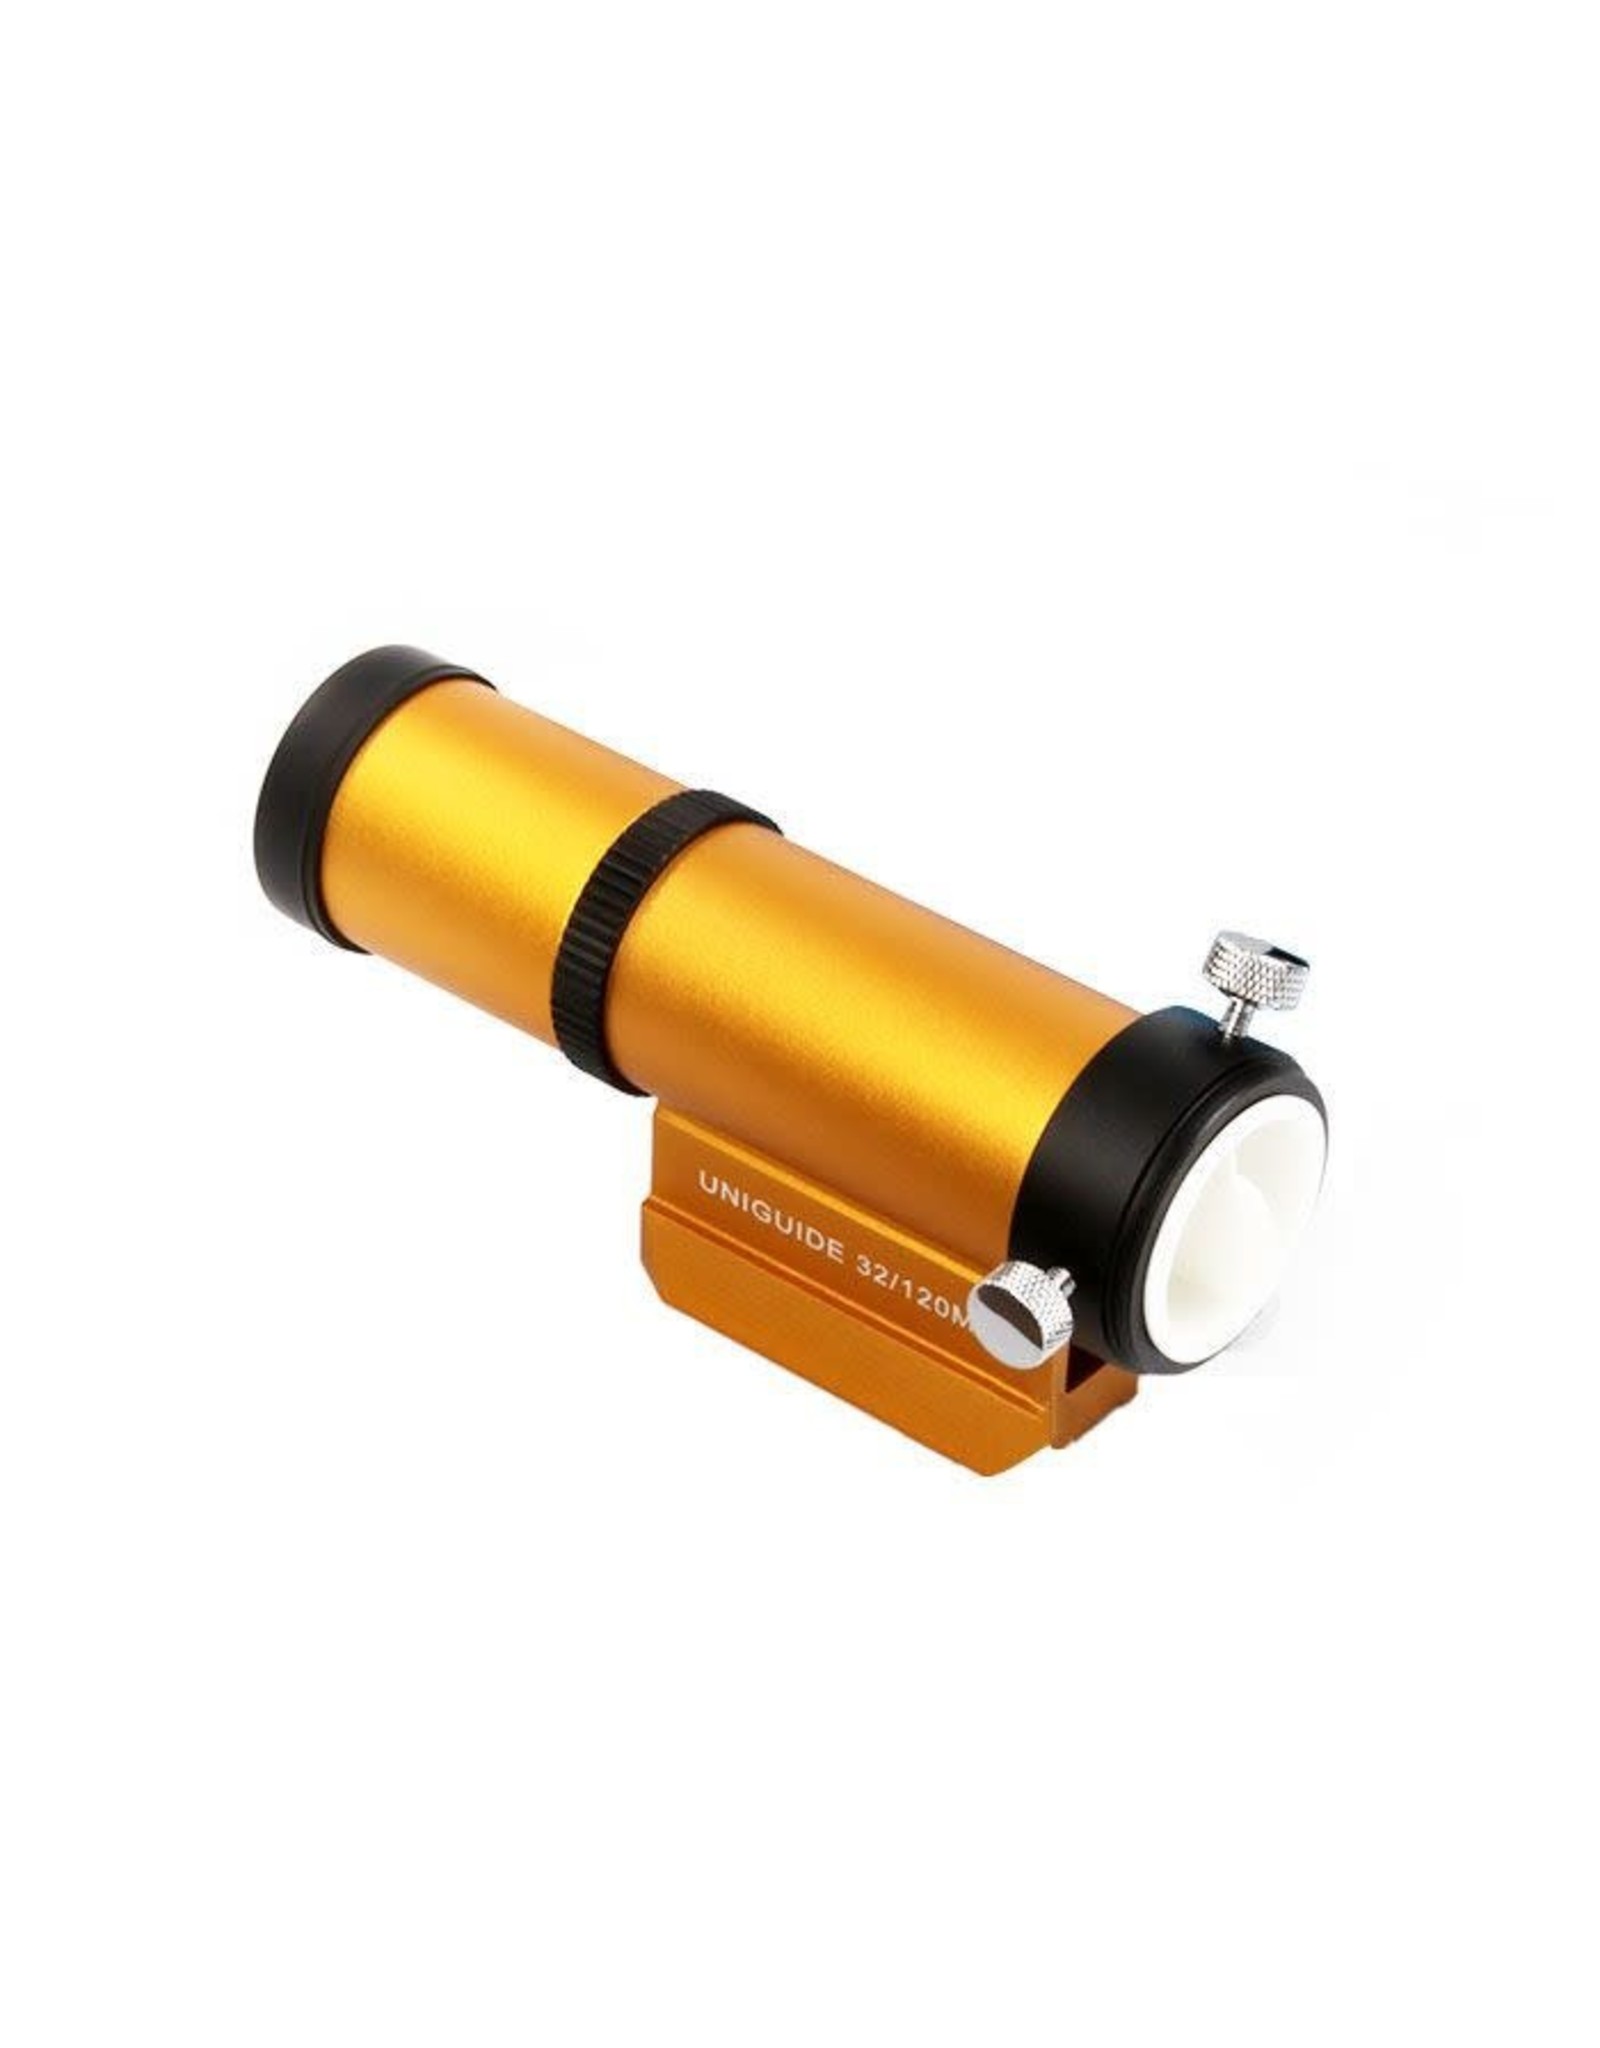 William Optics William Optics ZenithStar 61mm APO Refractor with 32 mm UniGuide - Specify Color